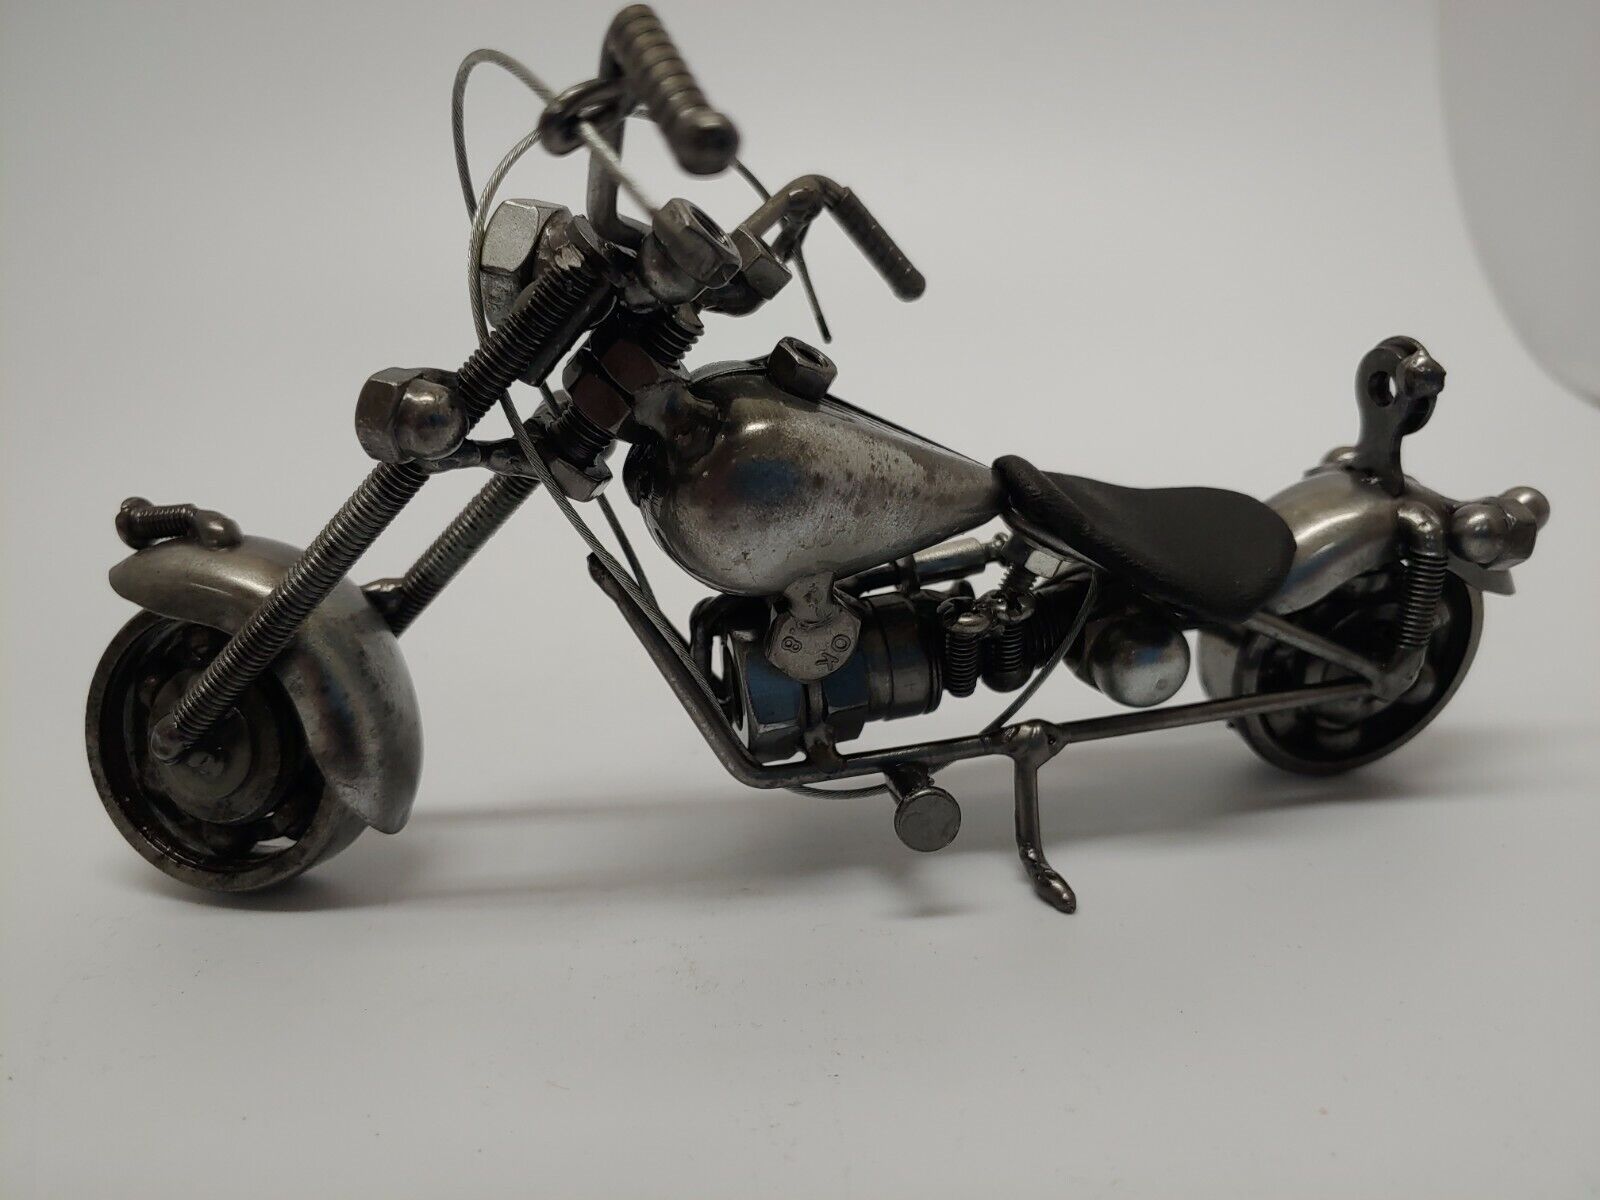 Metal Art Handmade Nuts and Bolts Racing Motorcycle